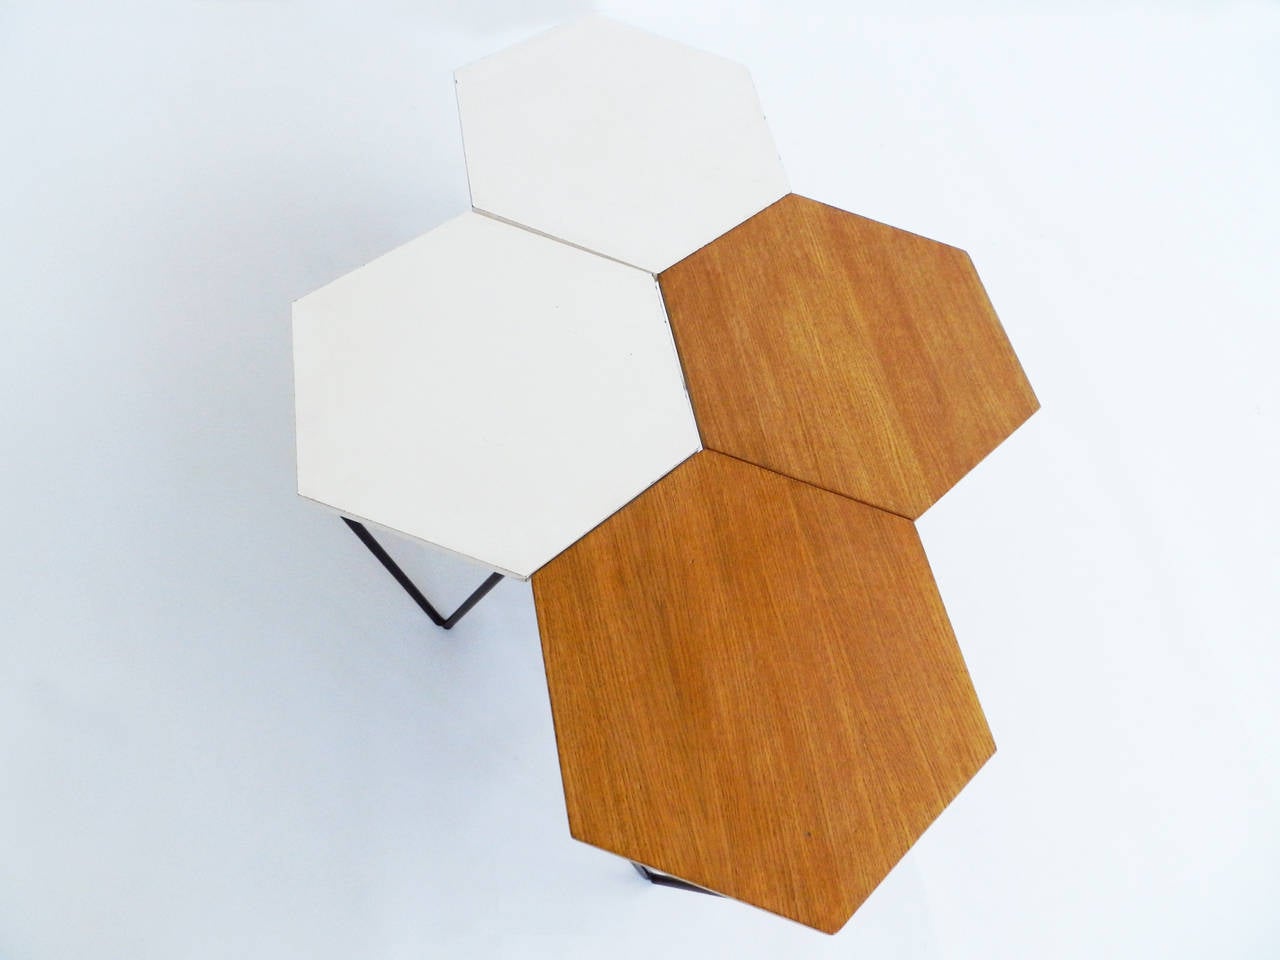 Gio Ponti, enameled metal and laminated wood Modular Coffee Tables for ISA, Italy 1950s

Litterature: Fabio Foroni, Alessandra Tavella, 1 x Gio Ponti in Paris Arredi di design 1930—1970, 2012, p.56